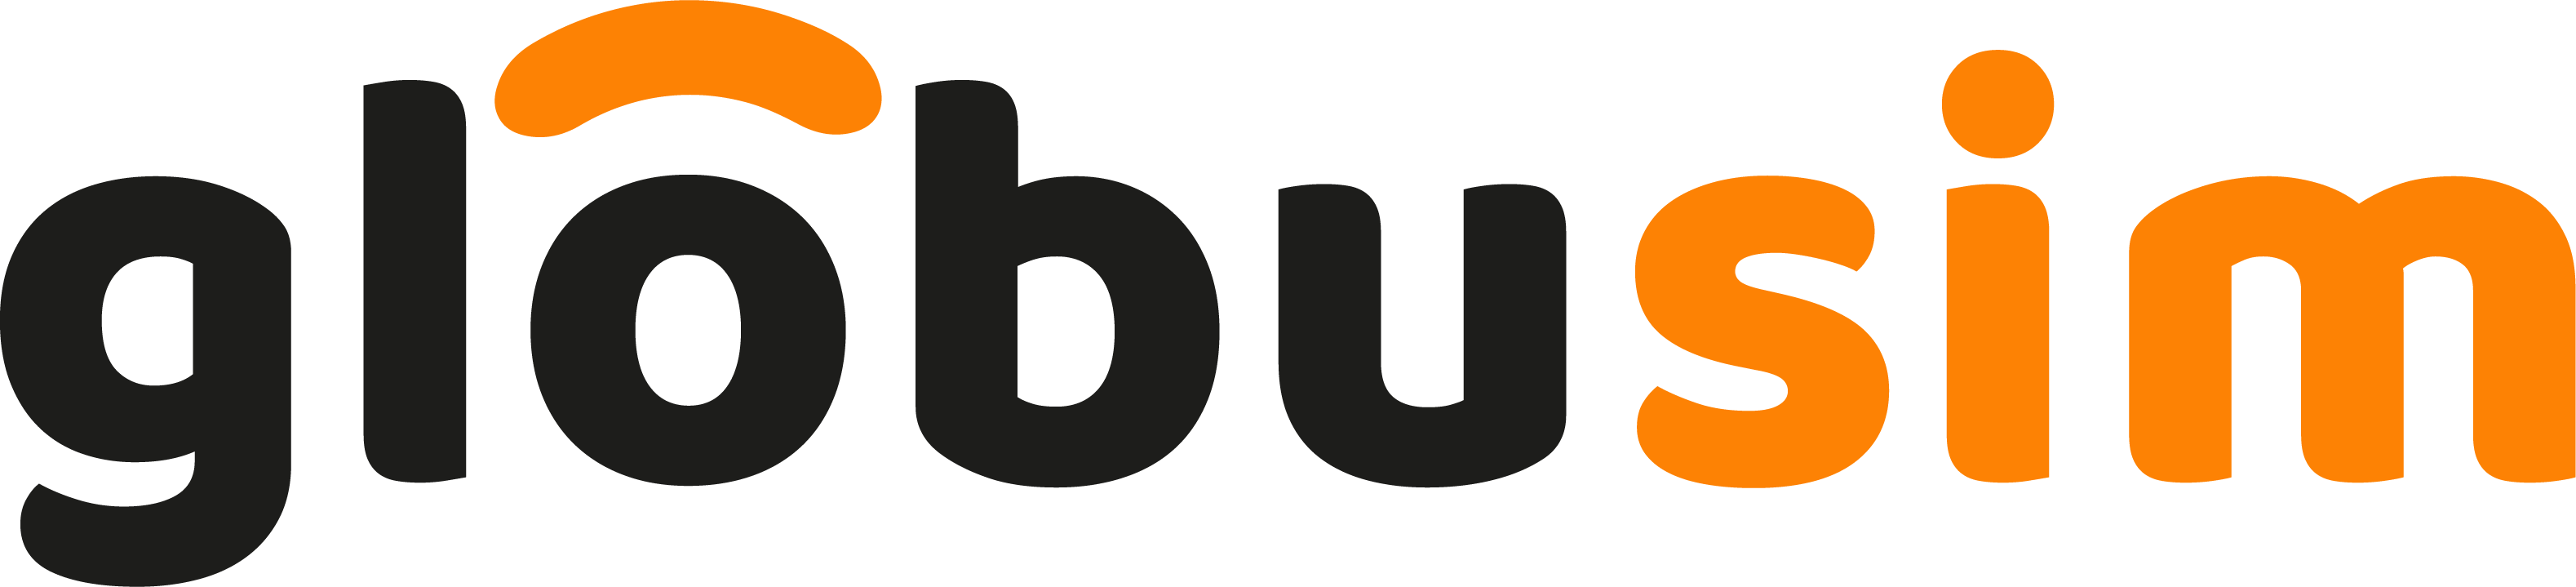 globusim logo